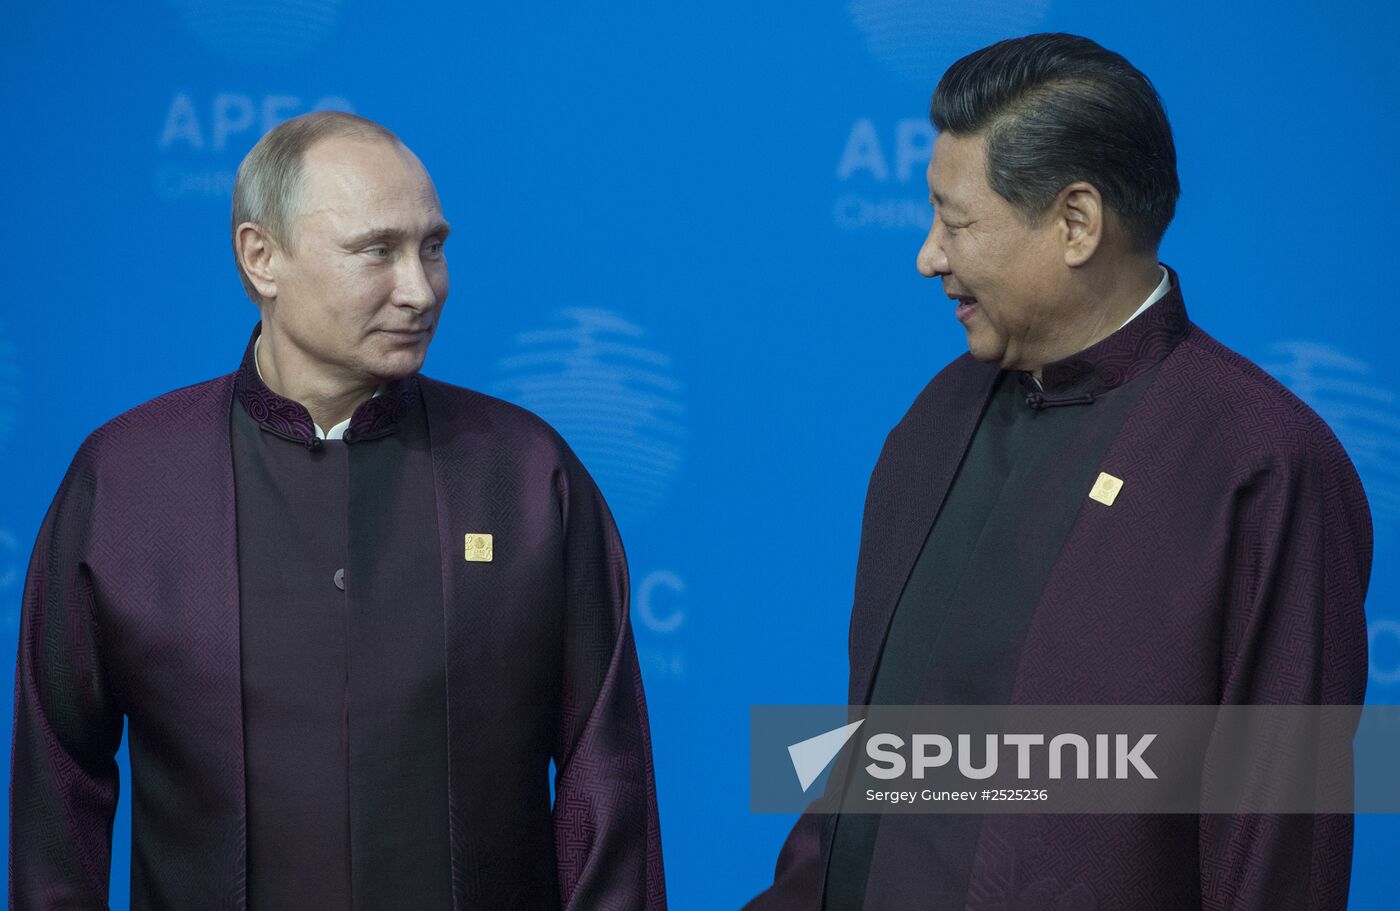 Vladimir Putin visits APEC Economic Leaders' Meeting